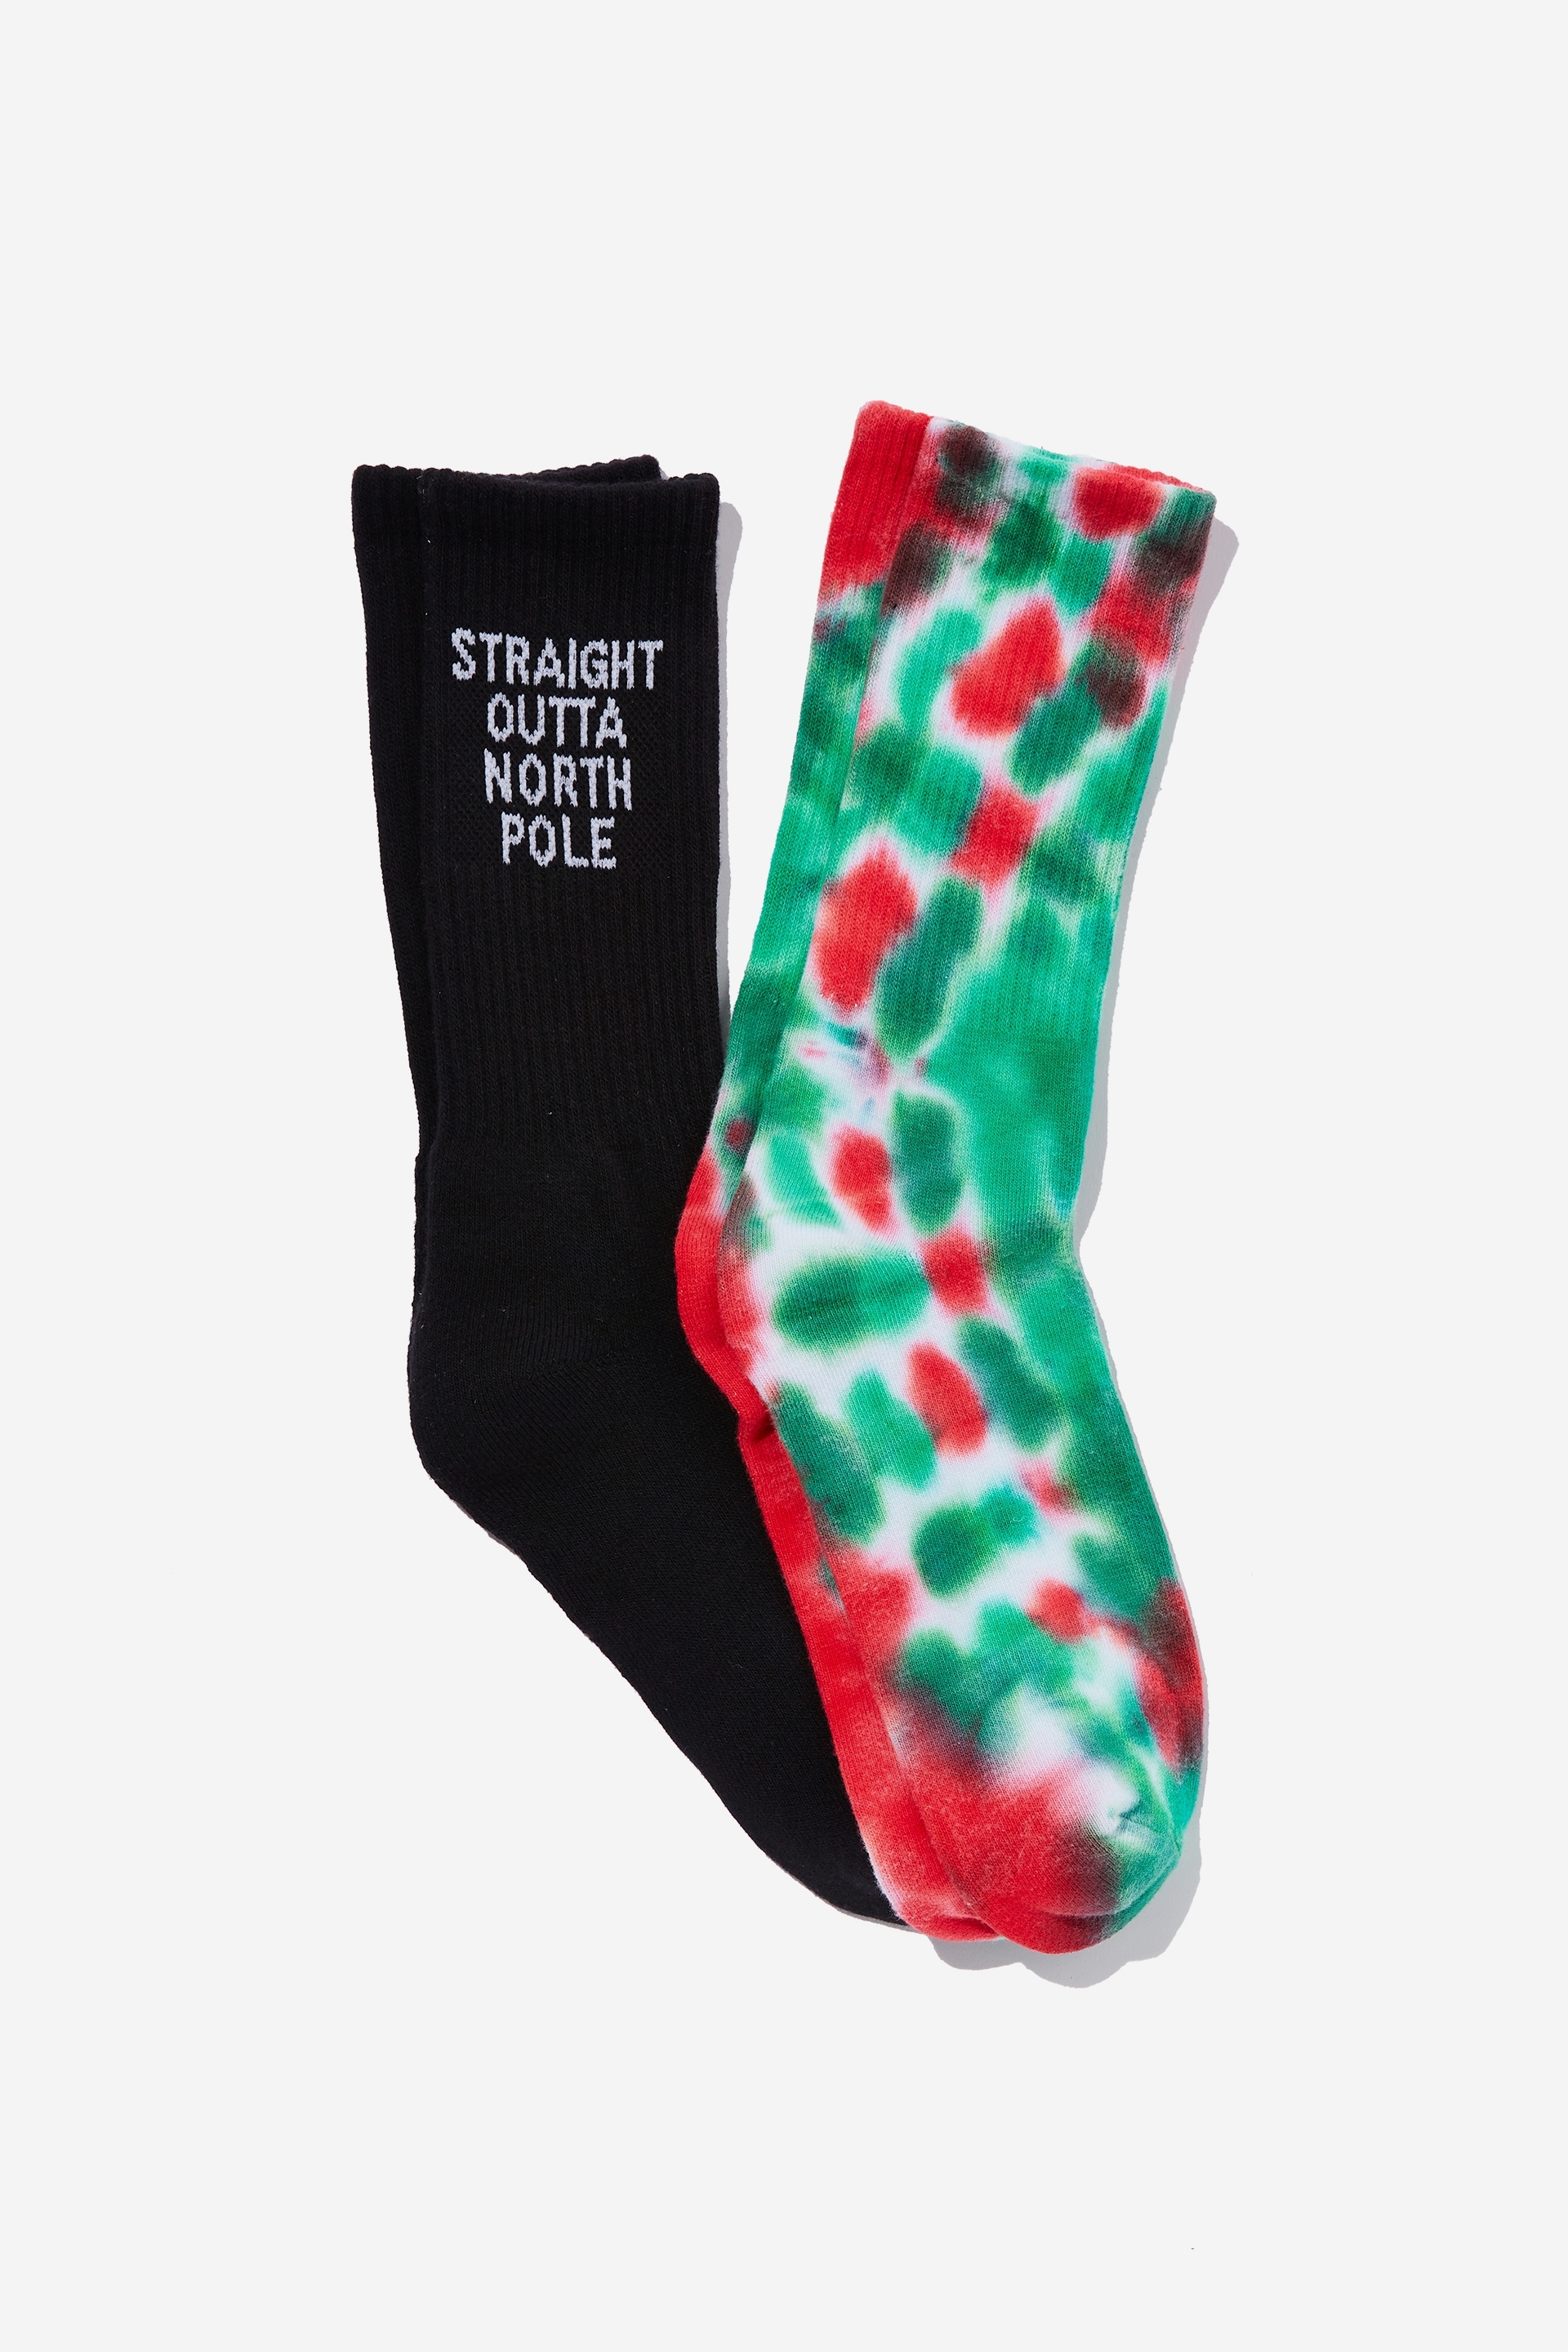 Factorie - Xmas Gift Pack Socks - Jersey Socks - Straight outta north pole/tie dye